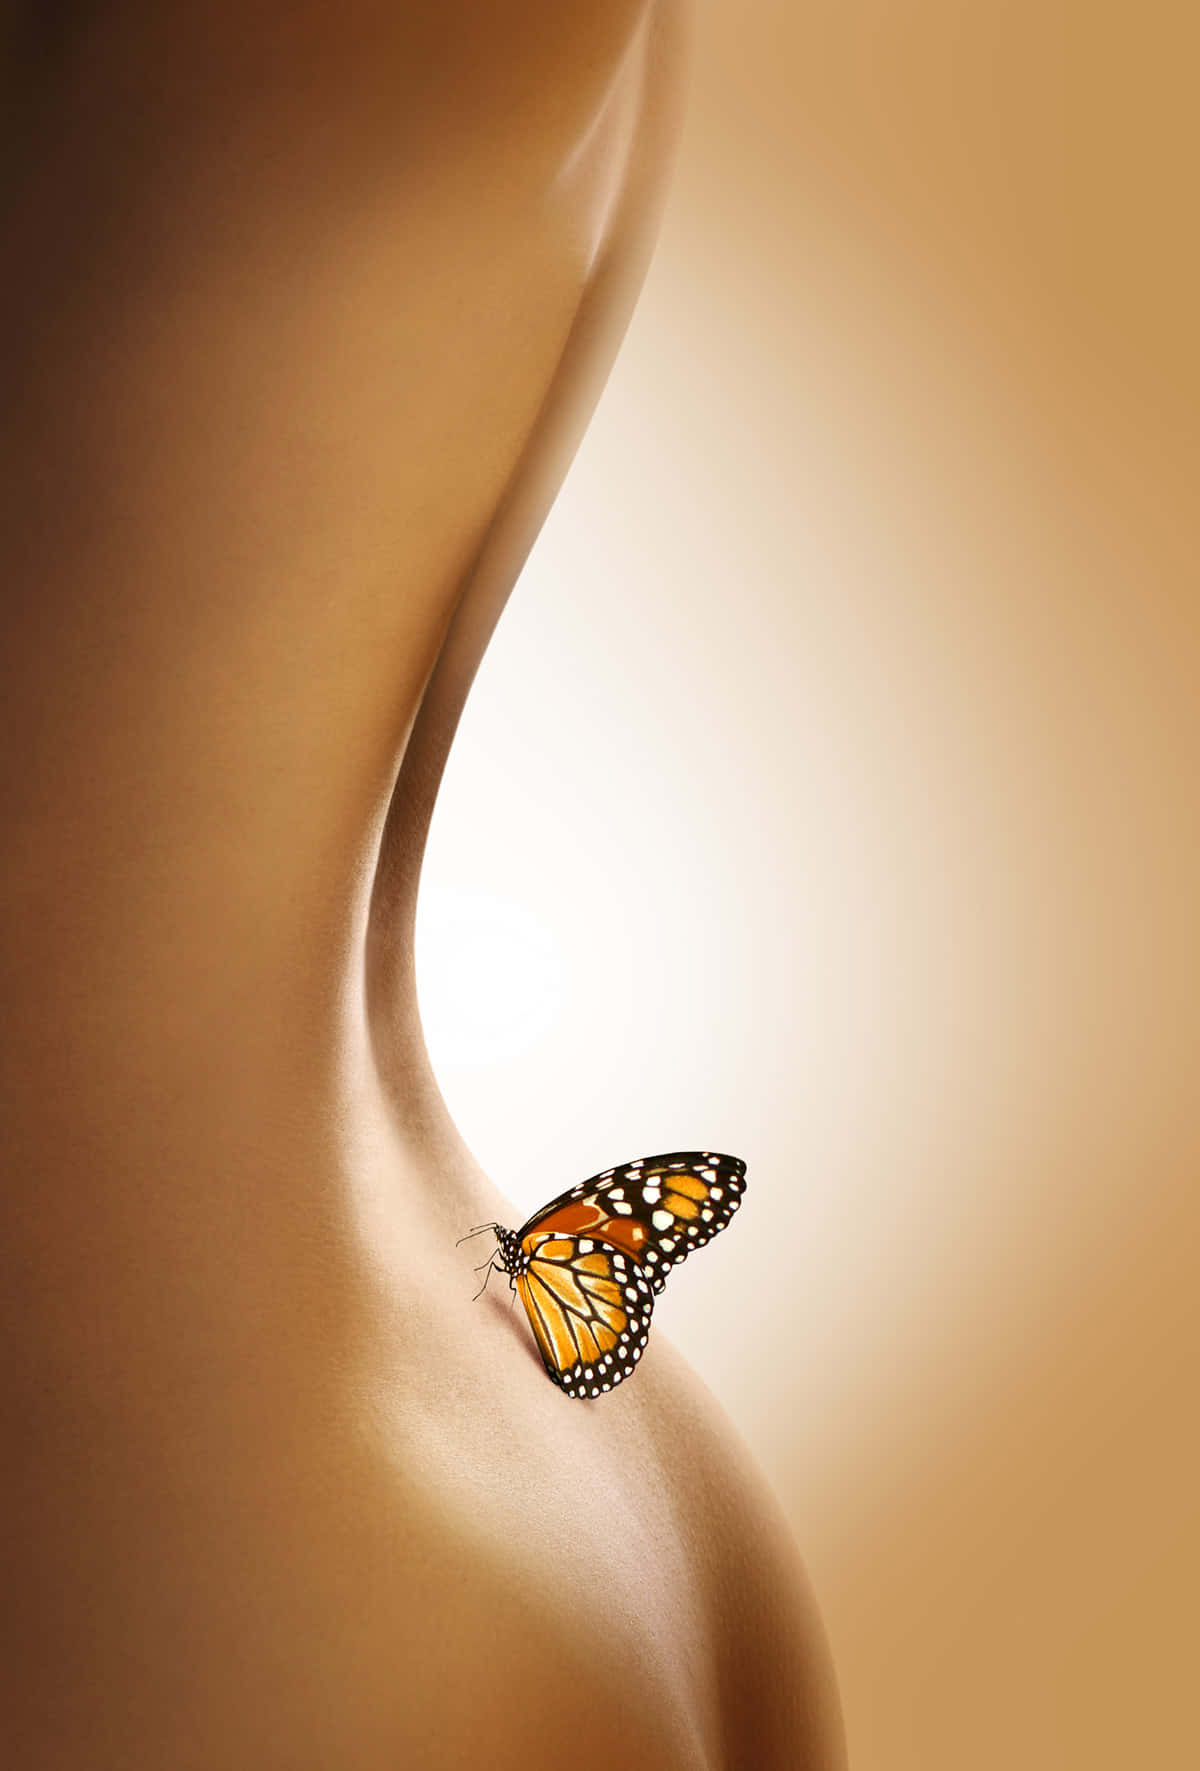 Sexy Body Butterfly Wallpaper